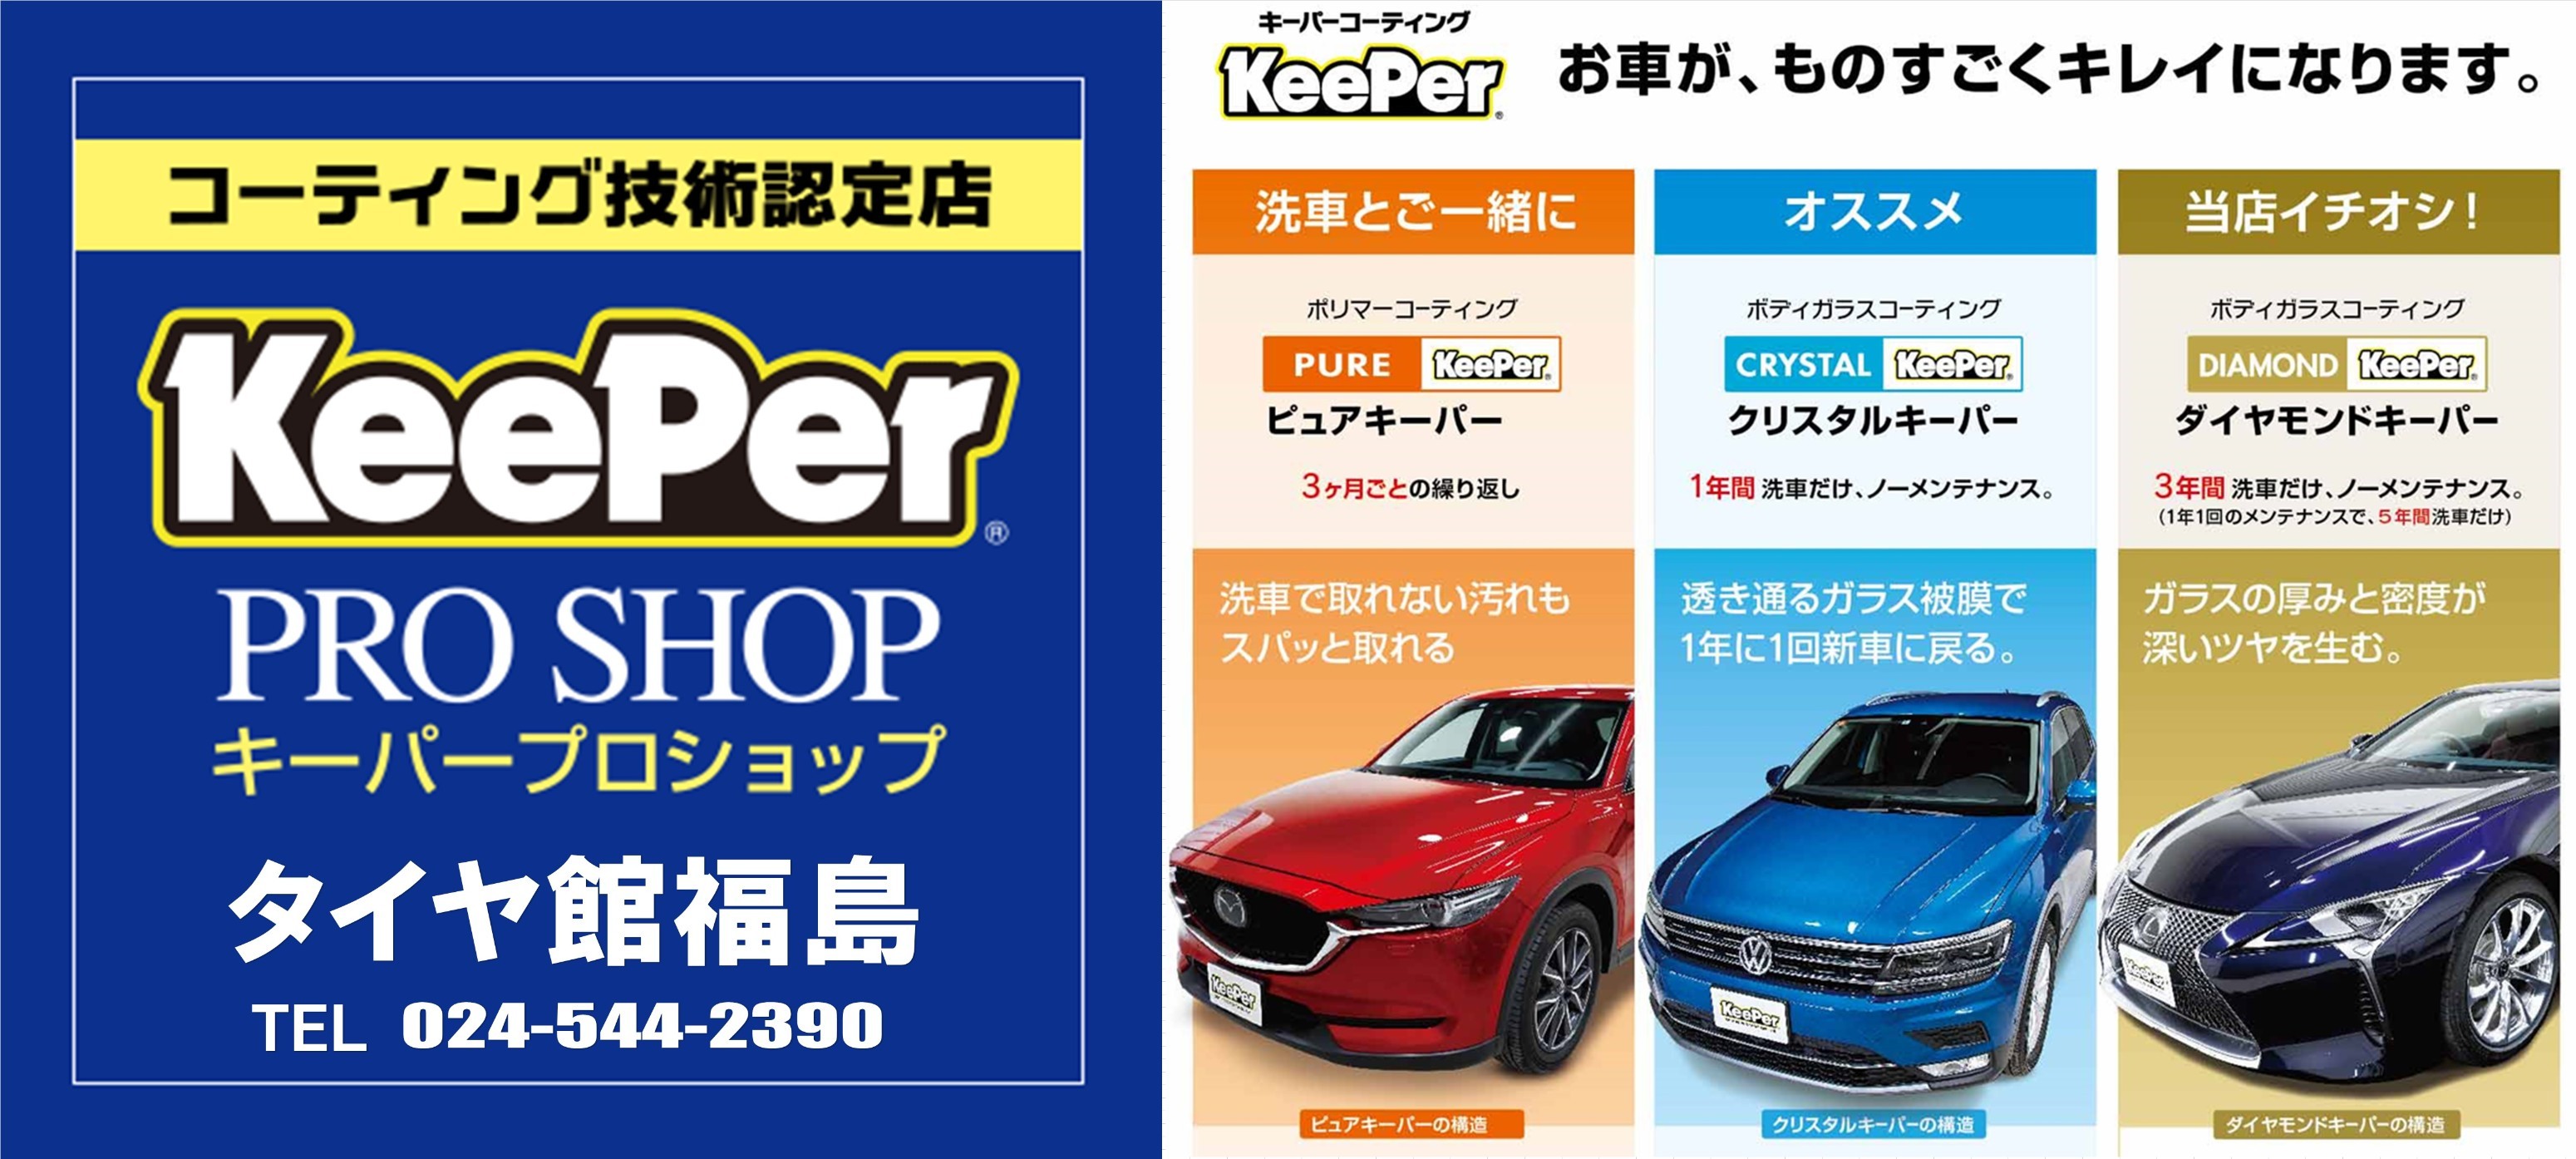 KeePer】カーコーティングと洗車のプロショップ 【タイヤ館福島】 新車 ...